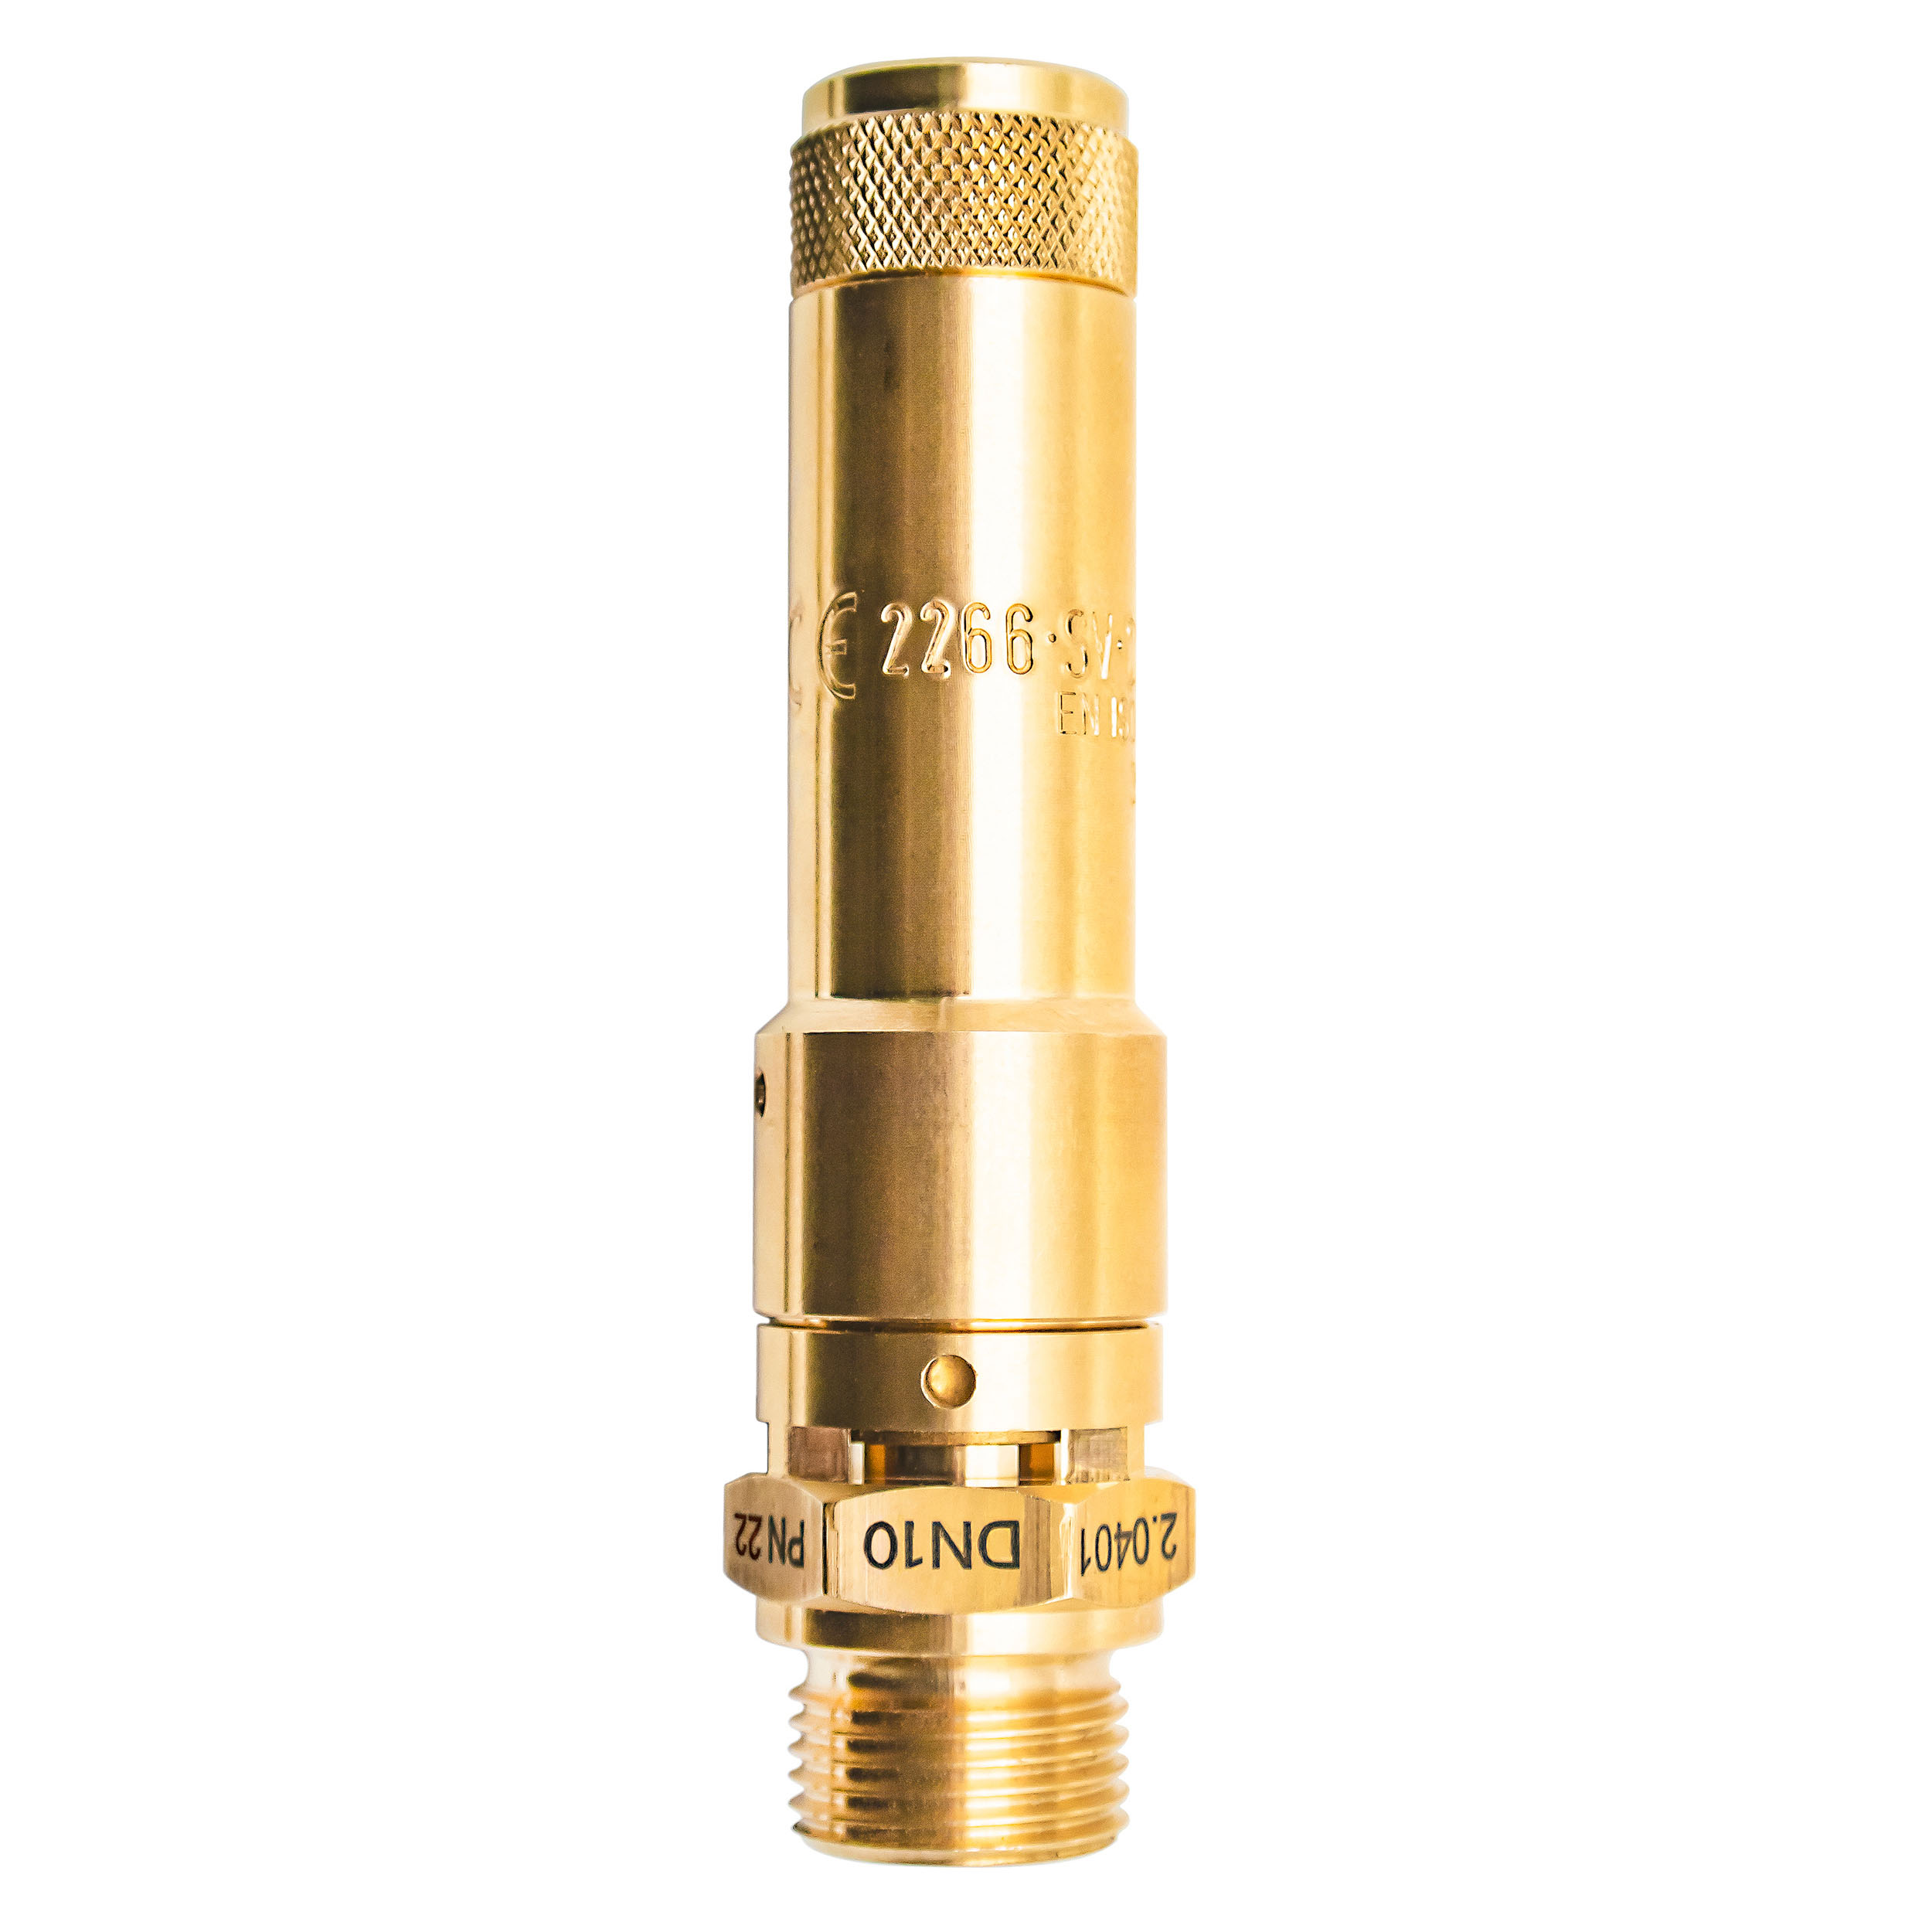 Savety valve component tested DN 10, G¾, set pressure: 16.8 bar (243,6 psi)